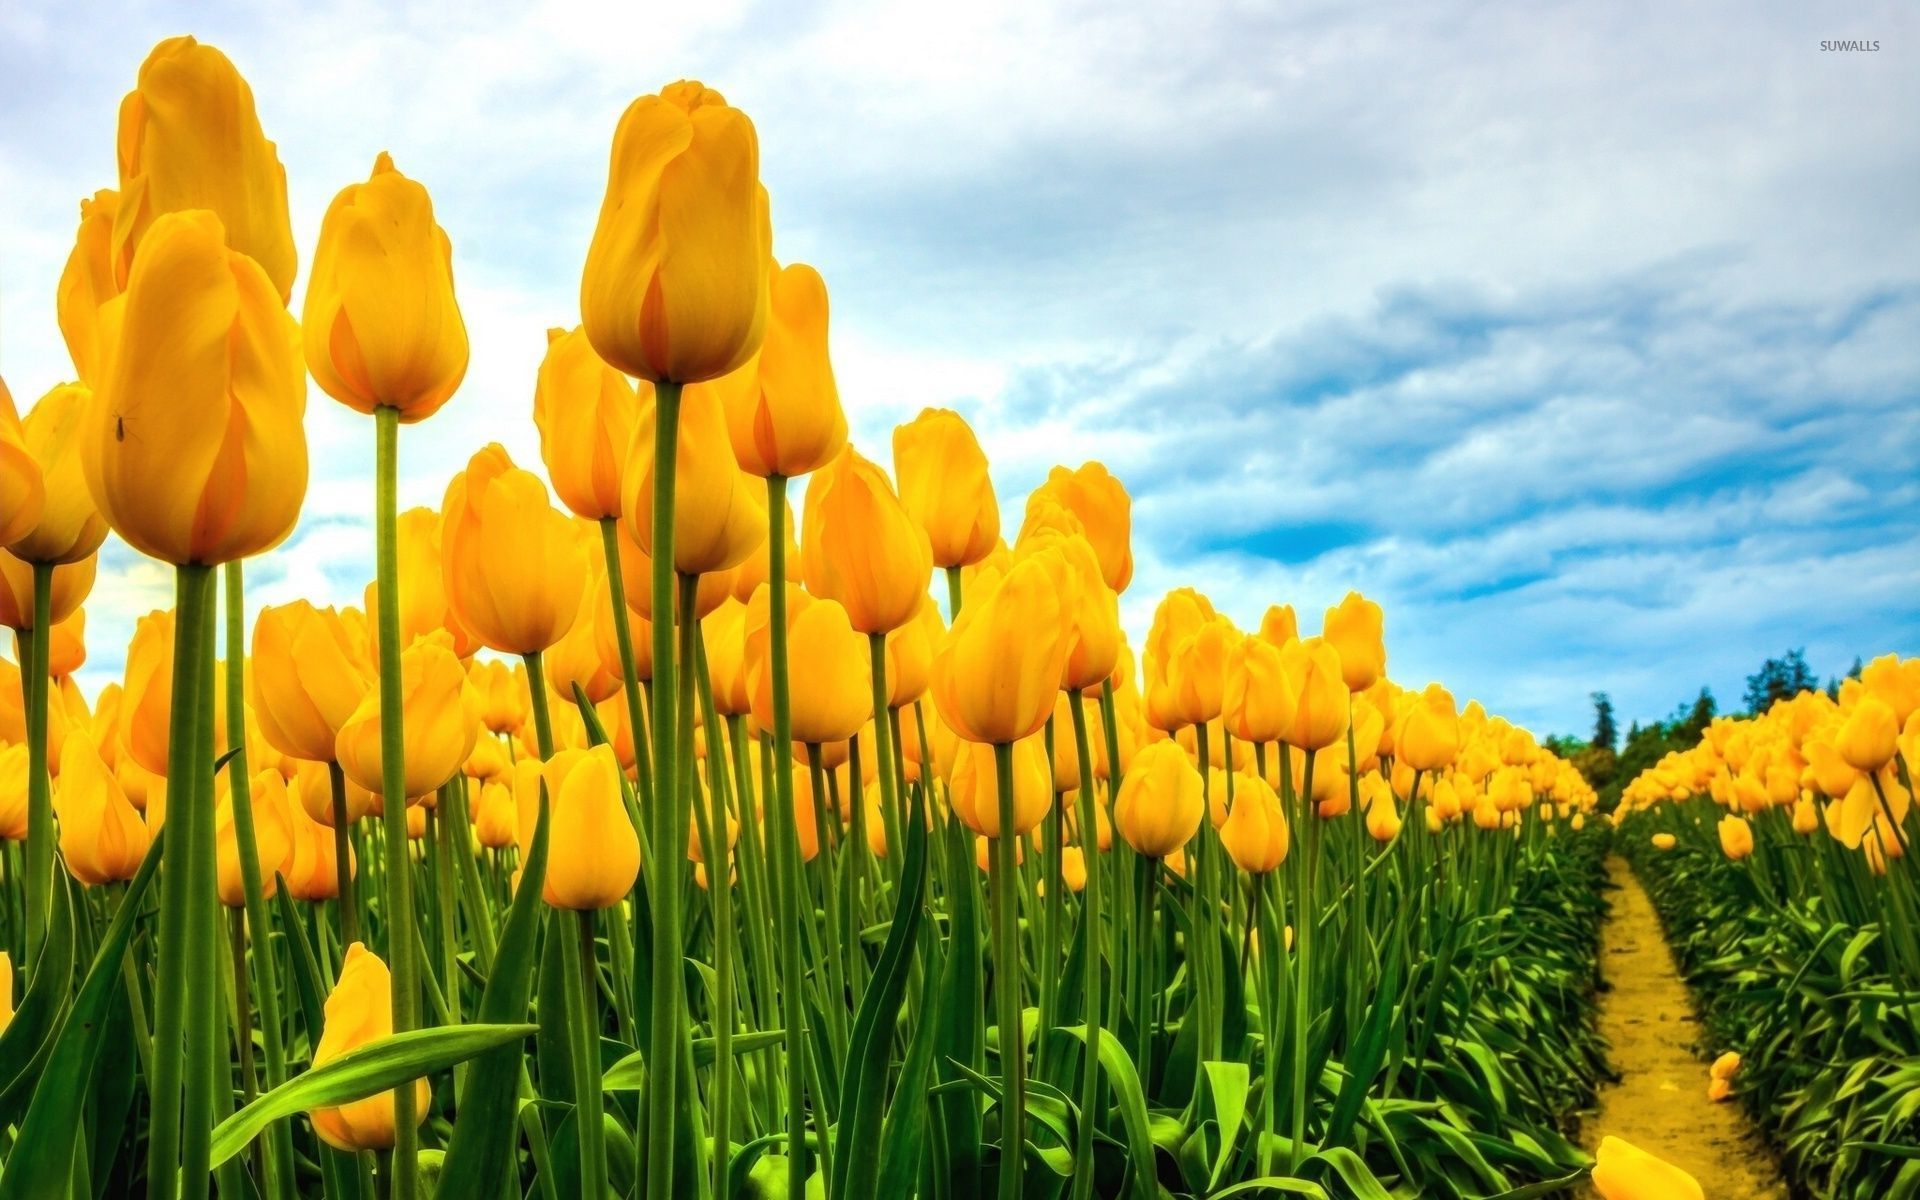 Field of yellow tulips wallpaper - Flower wallpapers - #34137